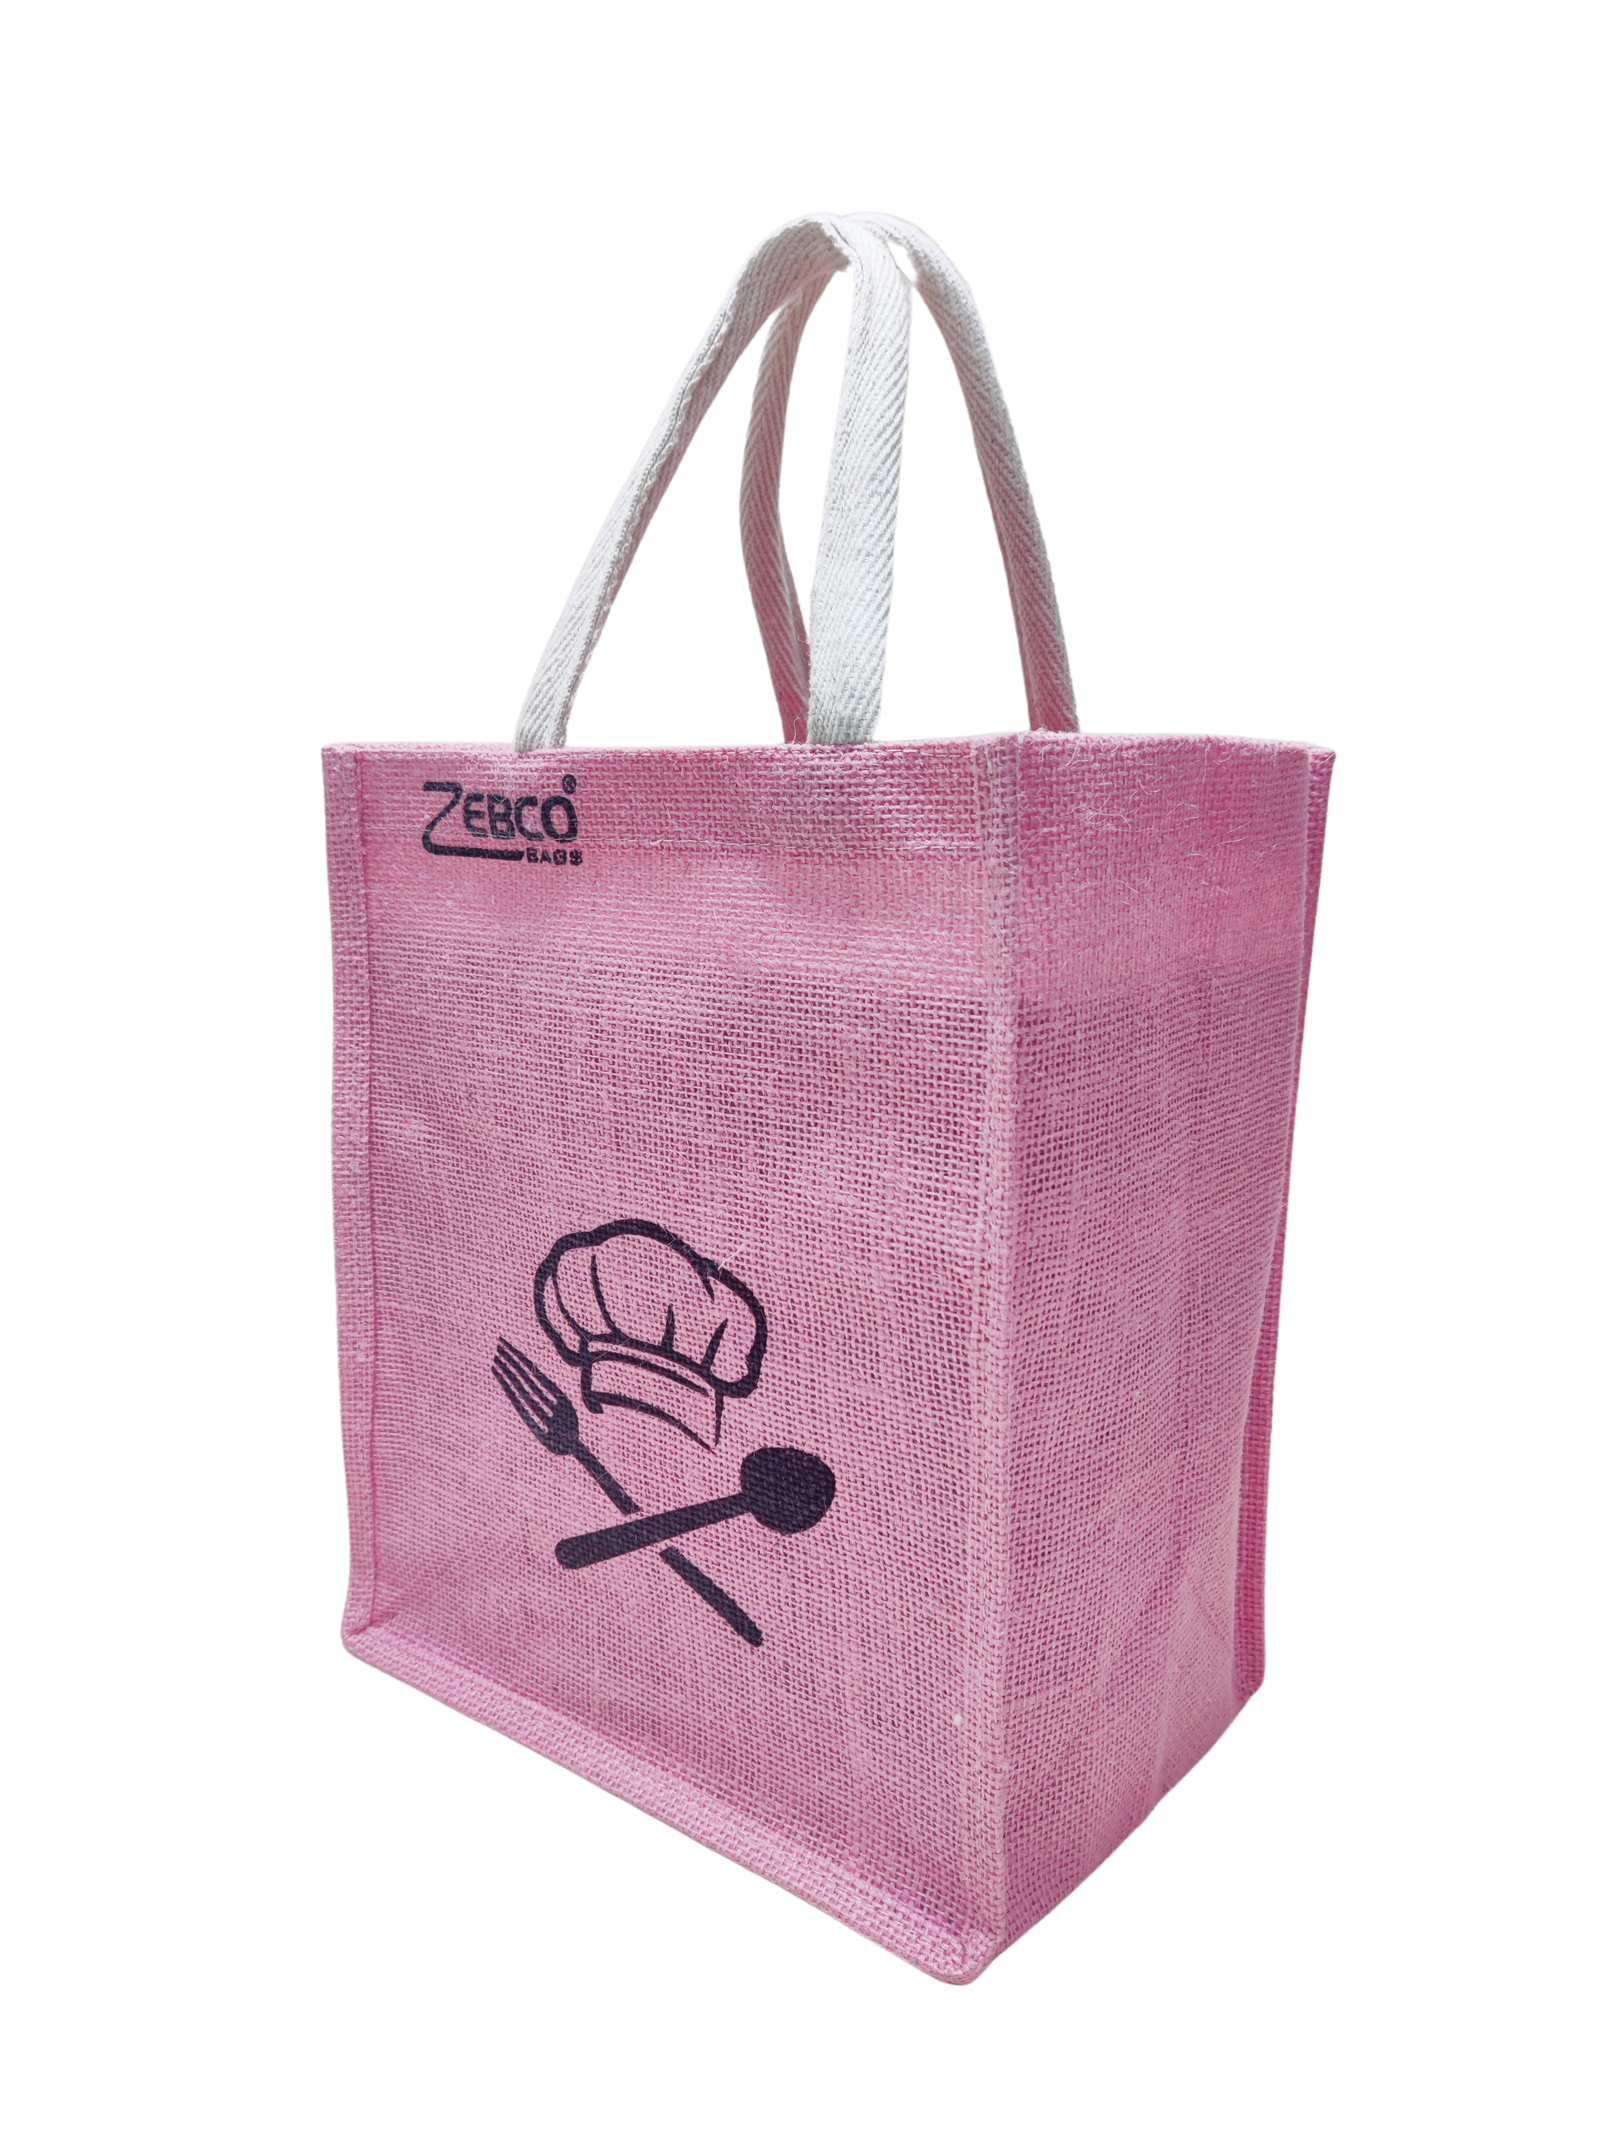 ZEBCO BAGS Women's Office Handbag Shoulder Messenger Ladies Bag